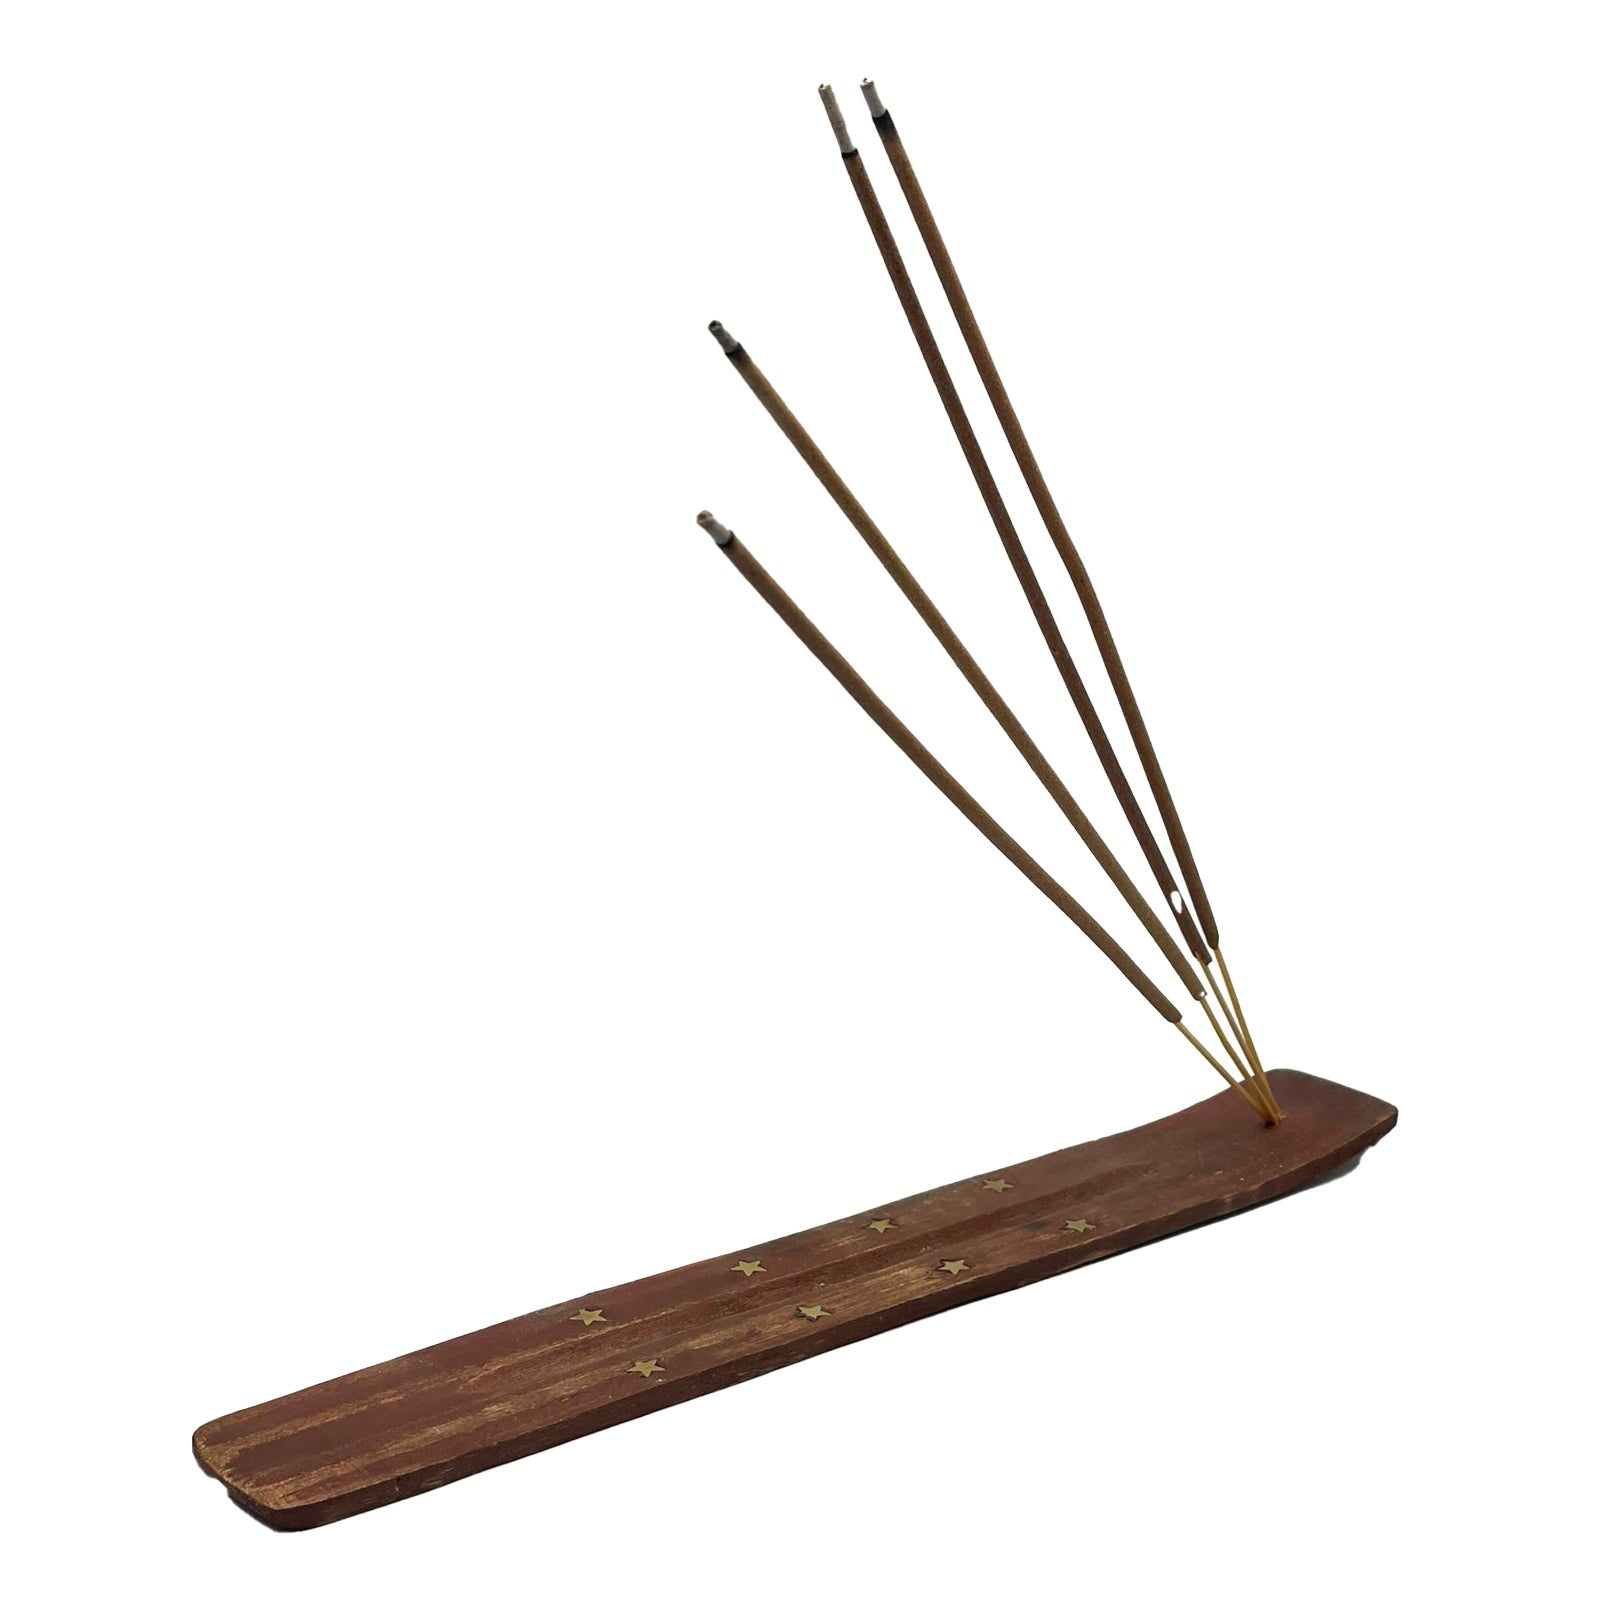 Rose Amber Incense Sticks with Wooden Holder (40 x 10”)